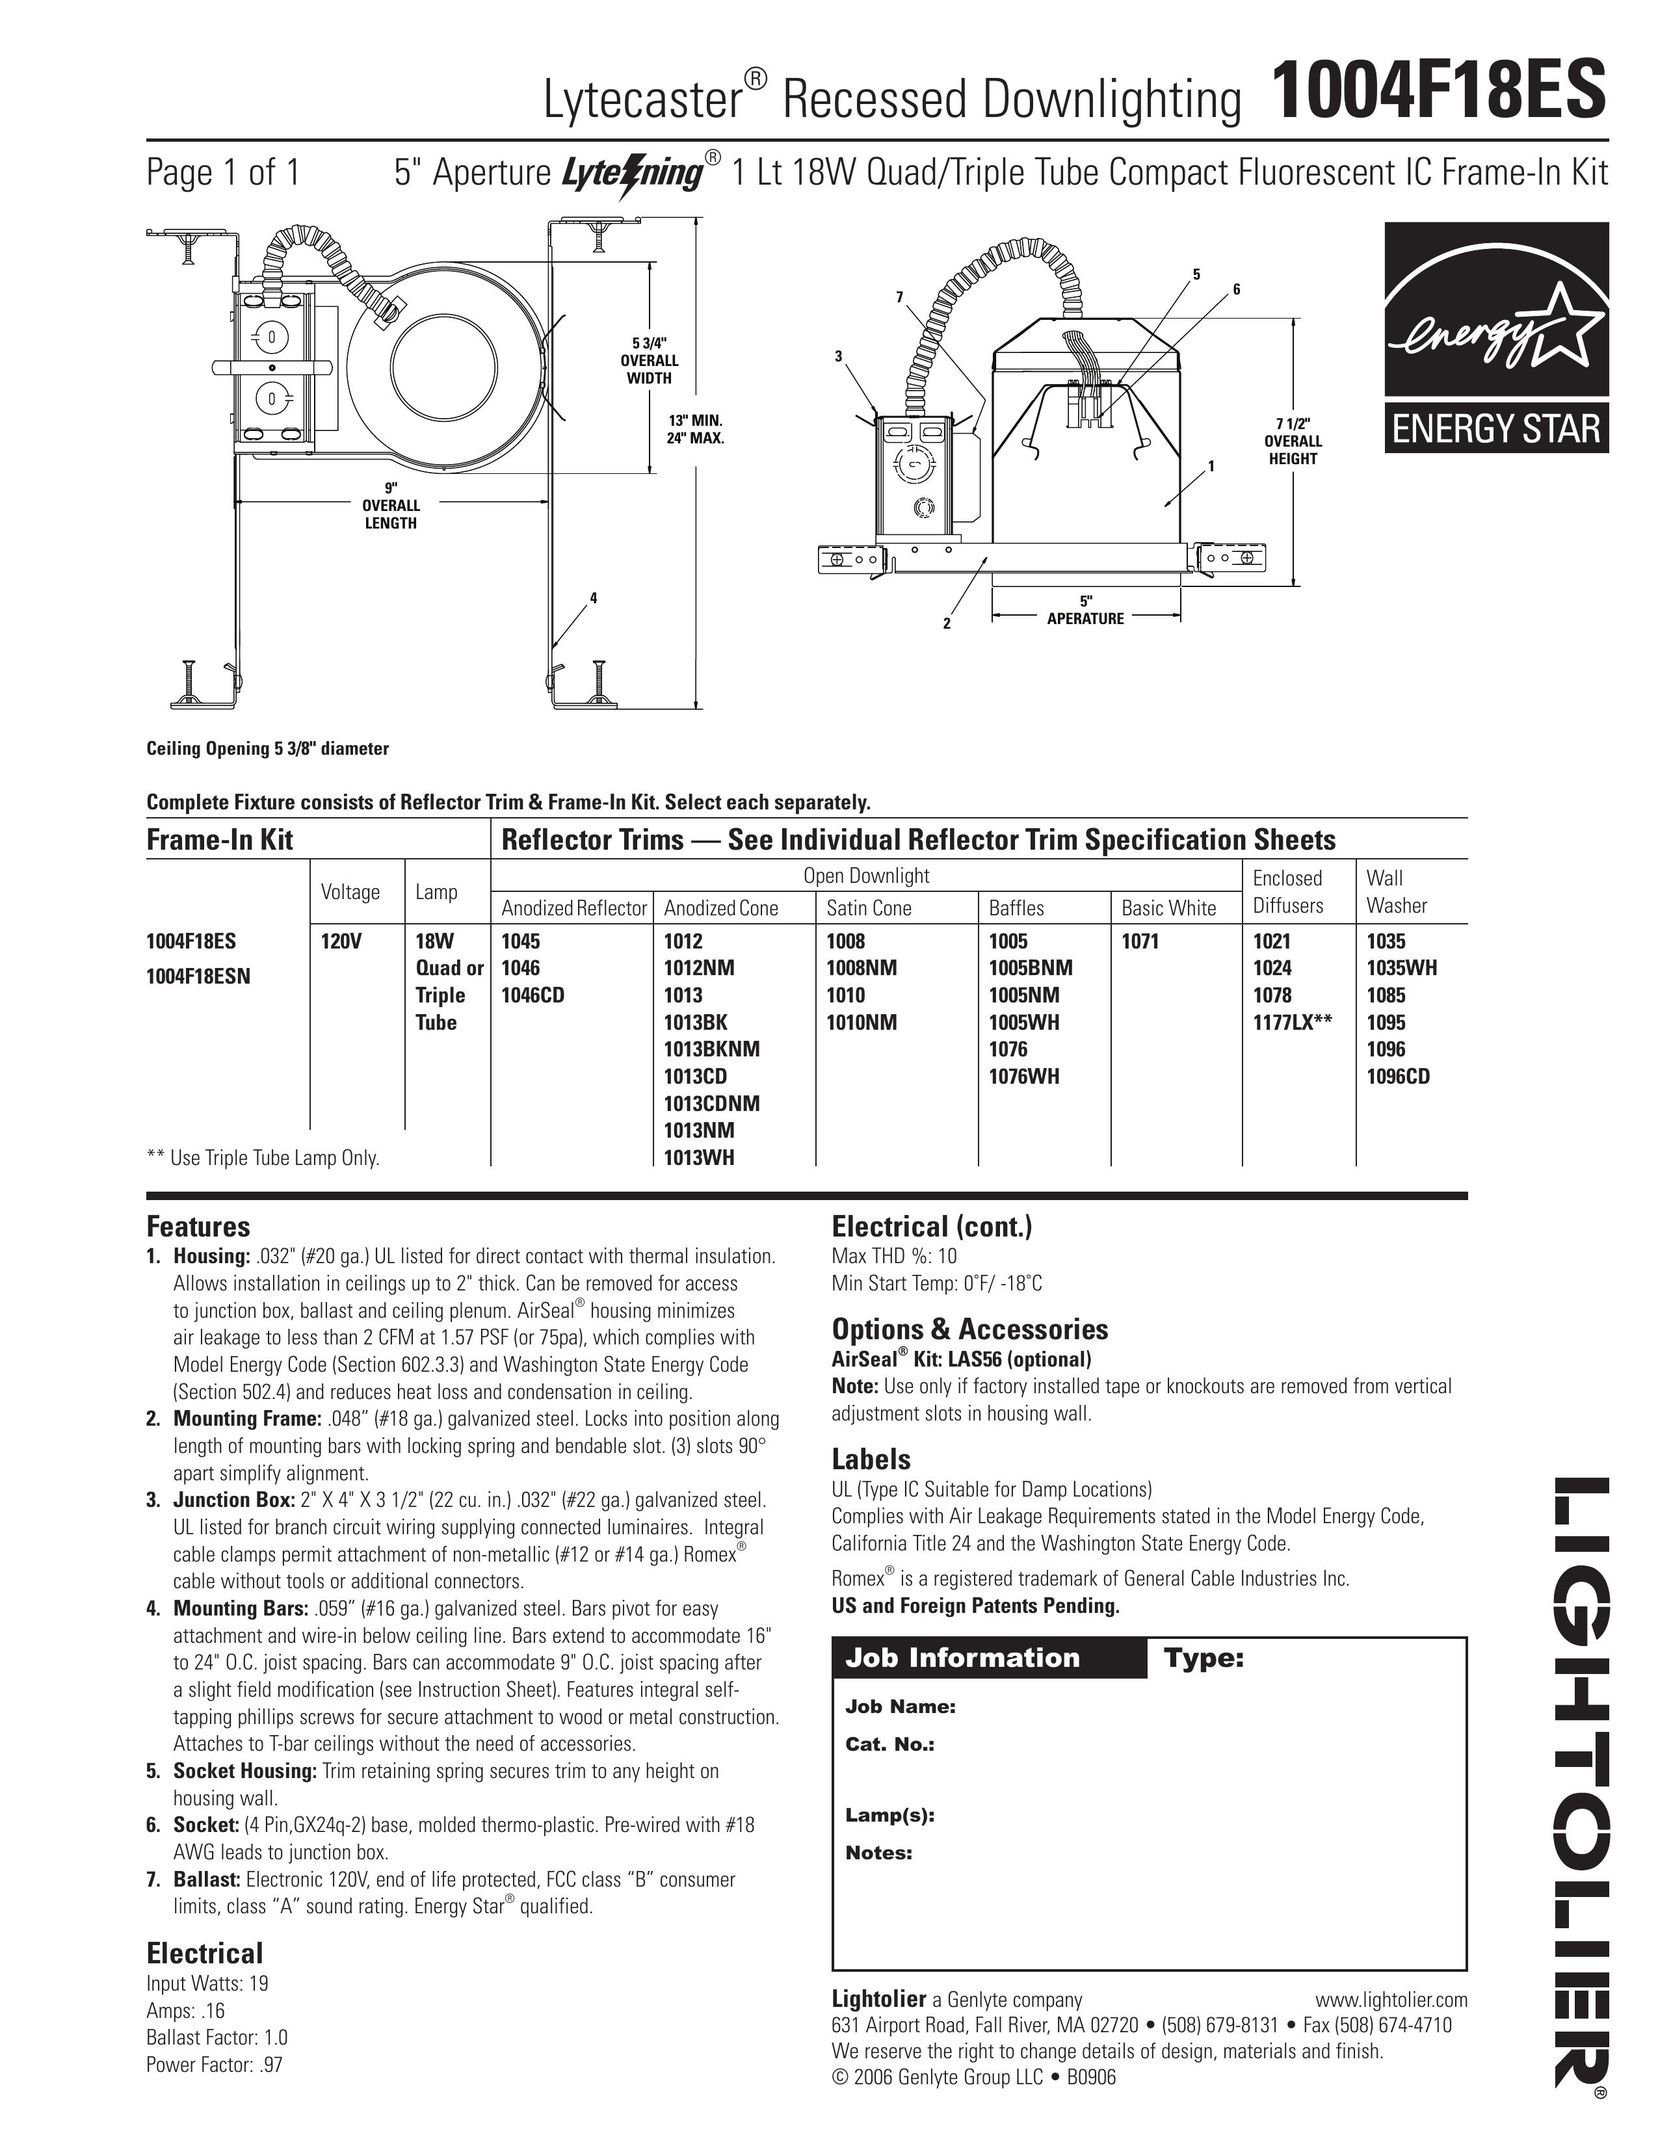 Lightolier 1004F18ES Indoor Furnishings User Manual